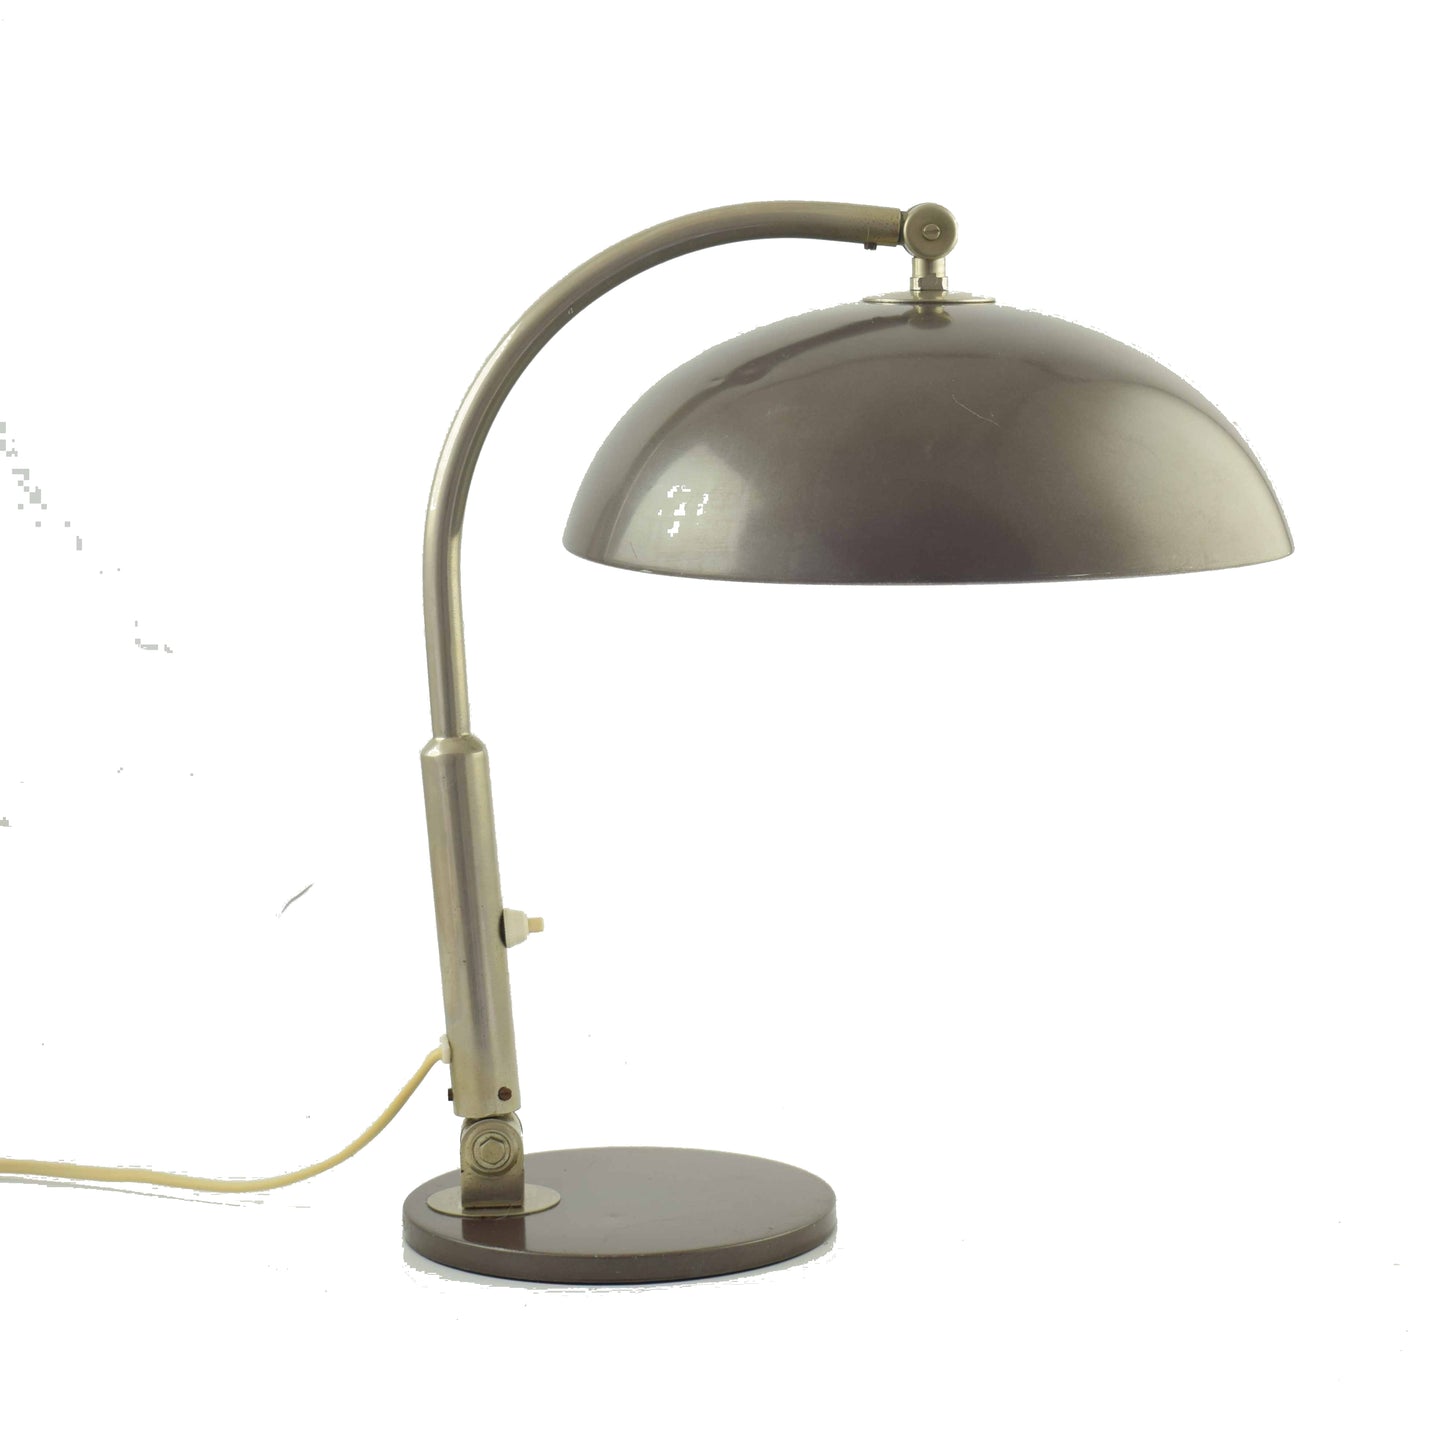 Hala Desk lamp Model 144 designed Busquet, famous dark grayish-brown and chrome design table light from The Netherlands